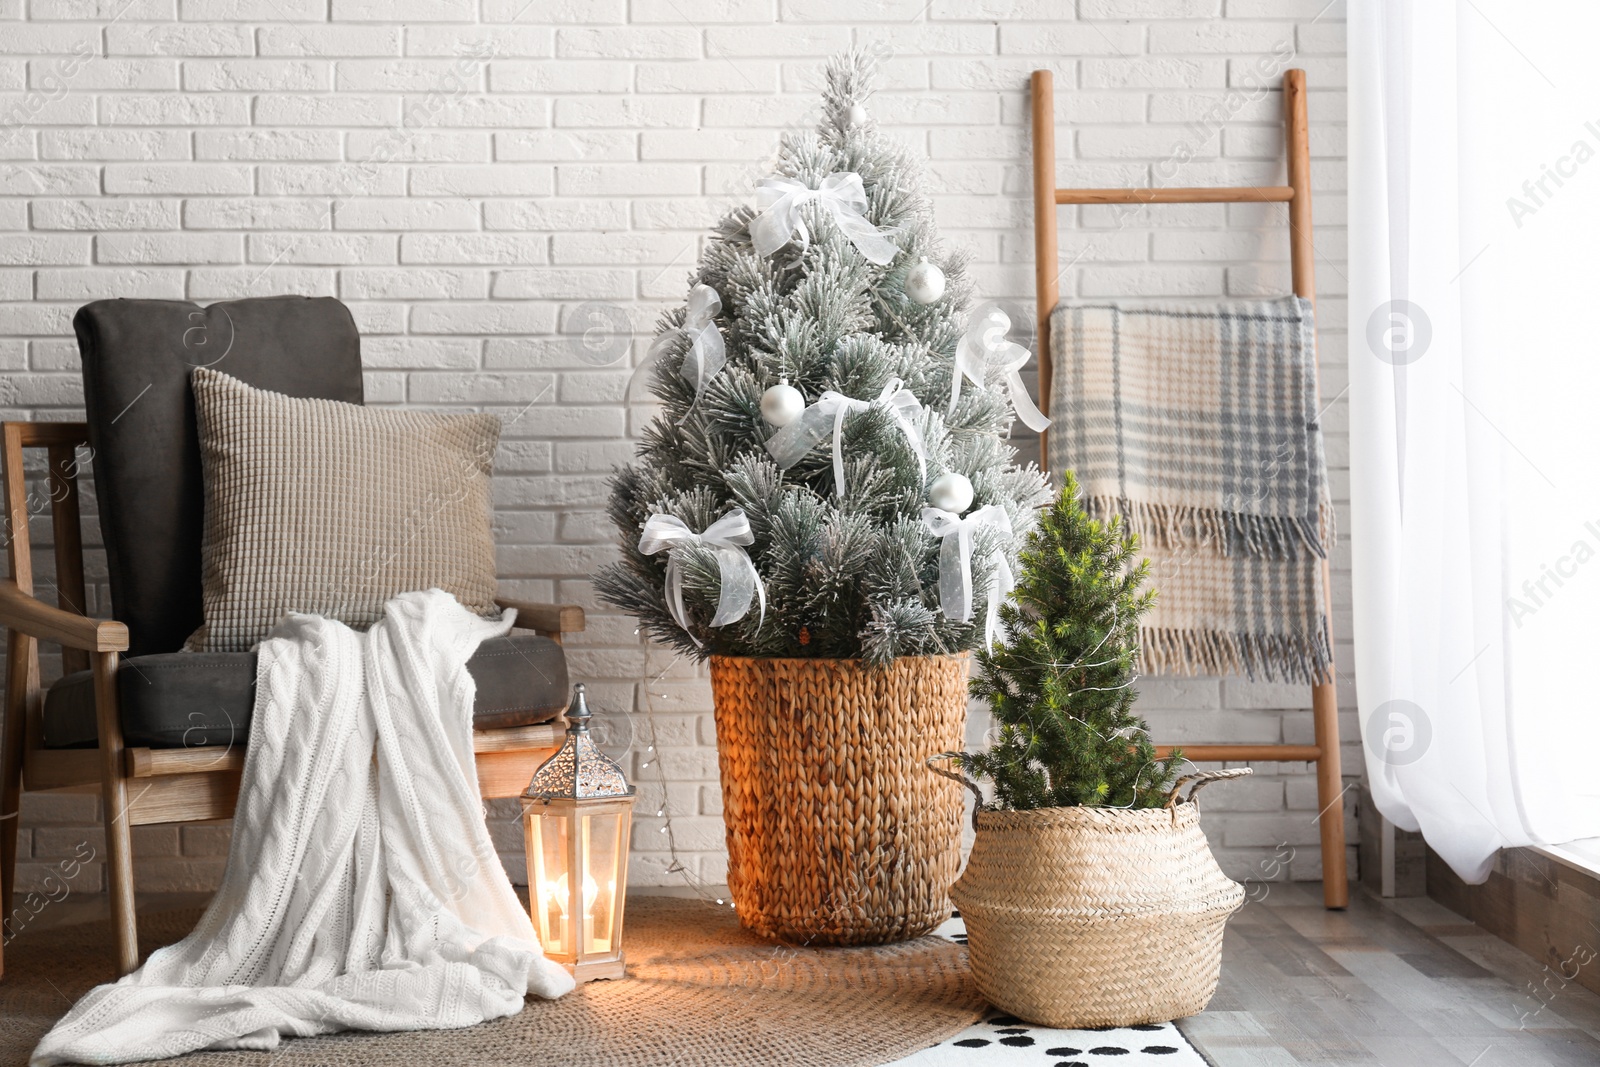 Photo of Stylish interior with beautiful Christmas tree near white brick wall